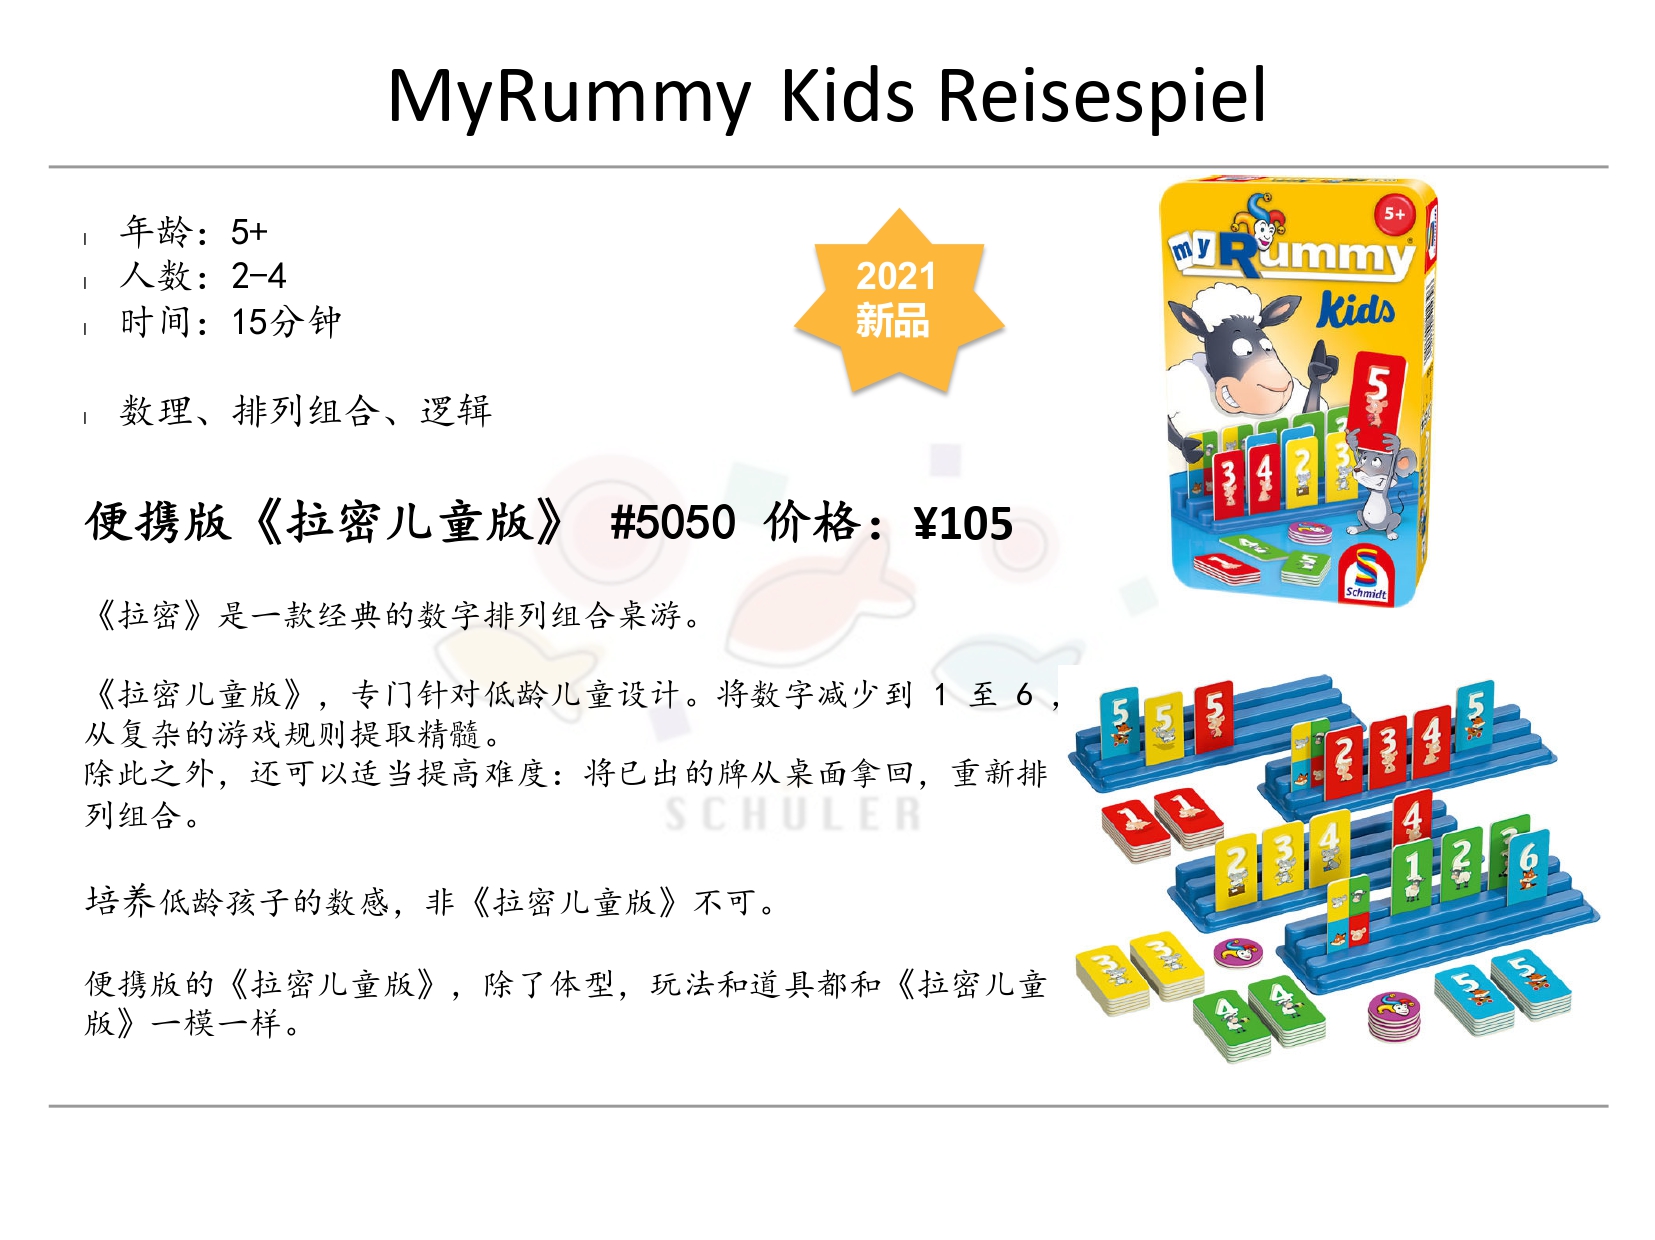 MyRummy Kids Reisespiel 拉密儿童版便携装